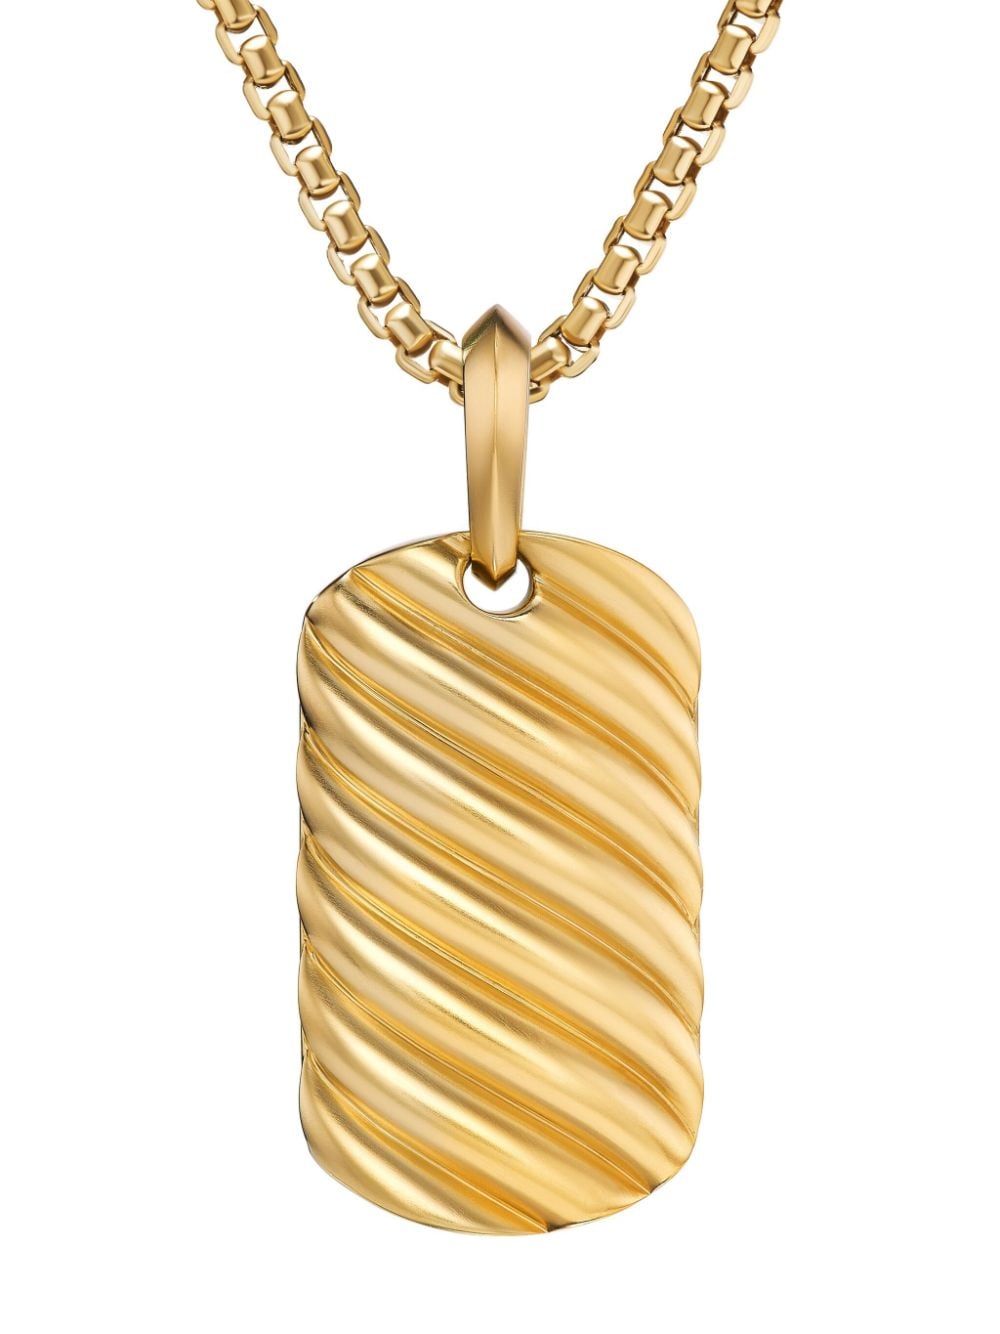 David Yurman 18kt yellow gold Sculpted Cable Tag necklace charm von David Yurman